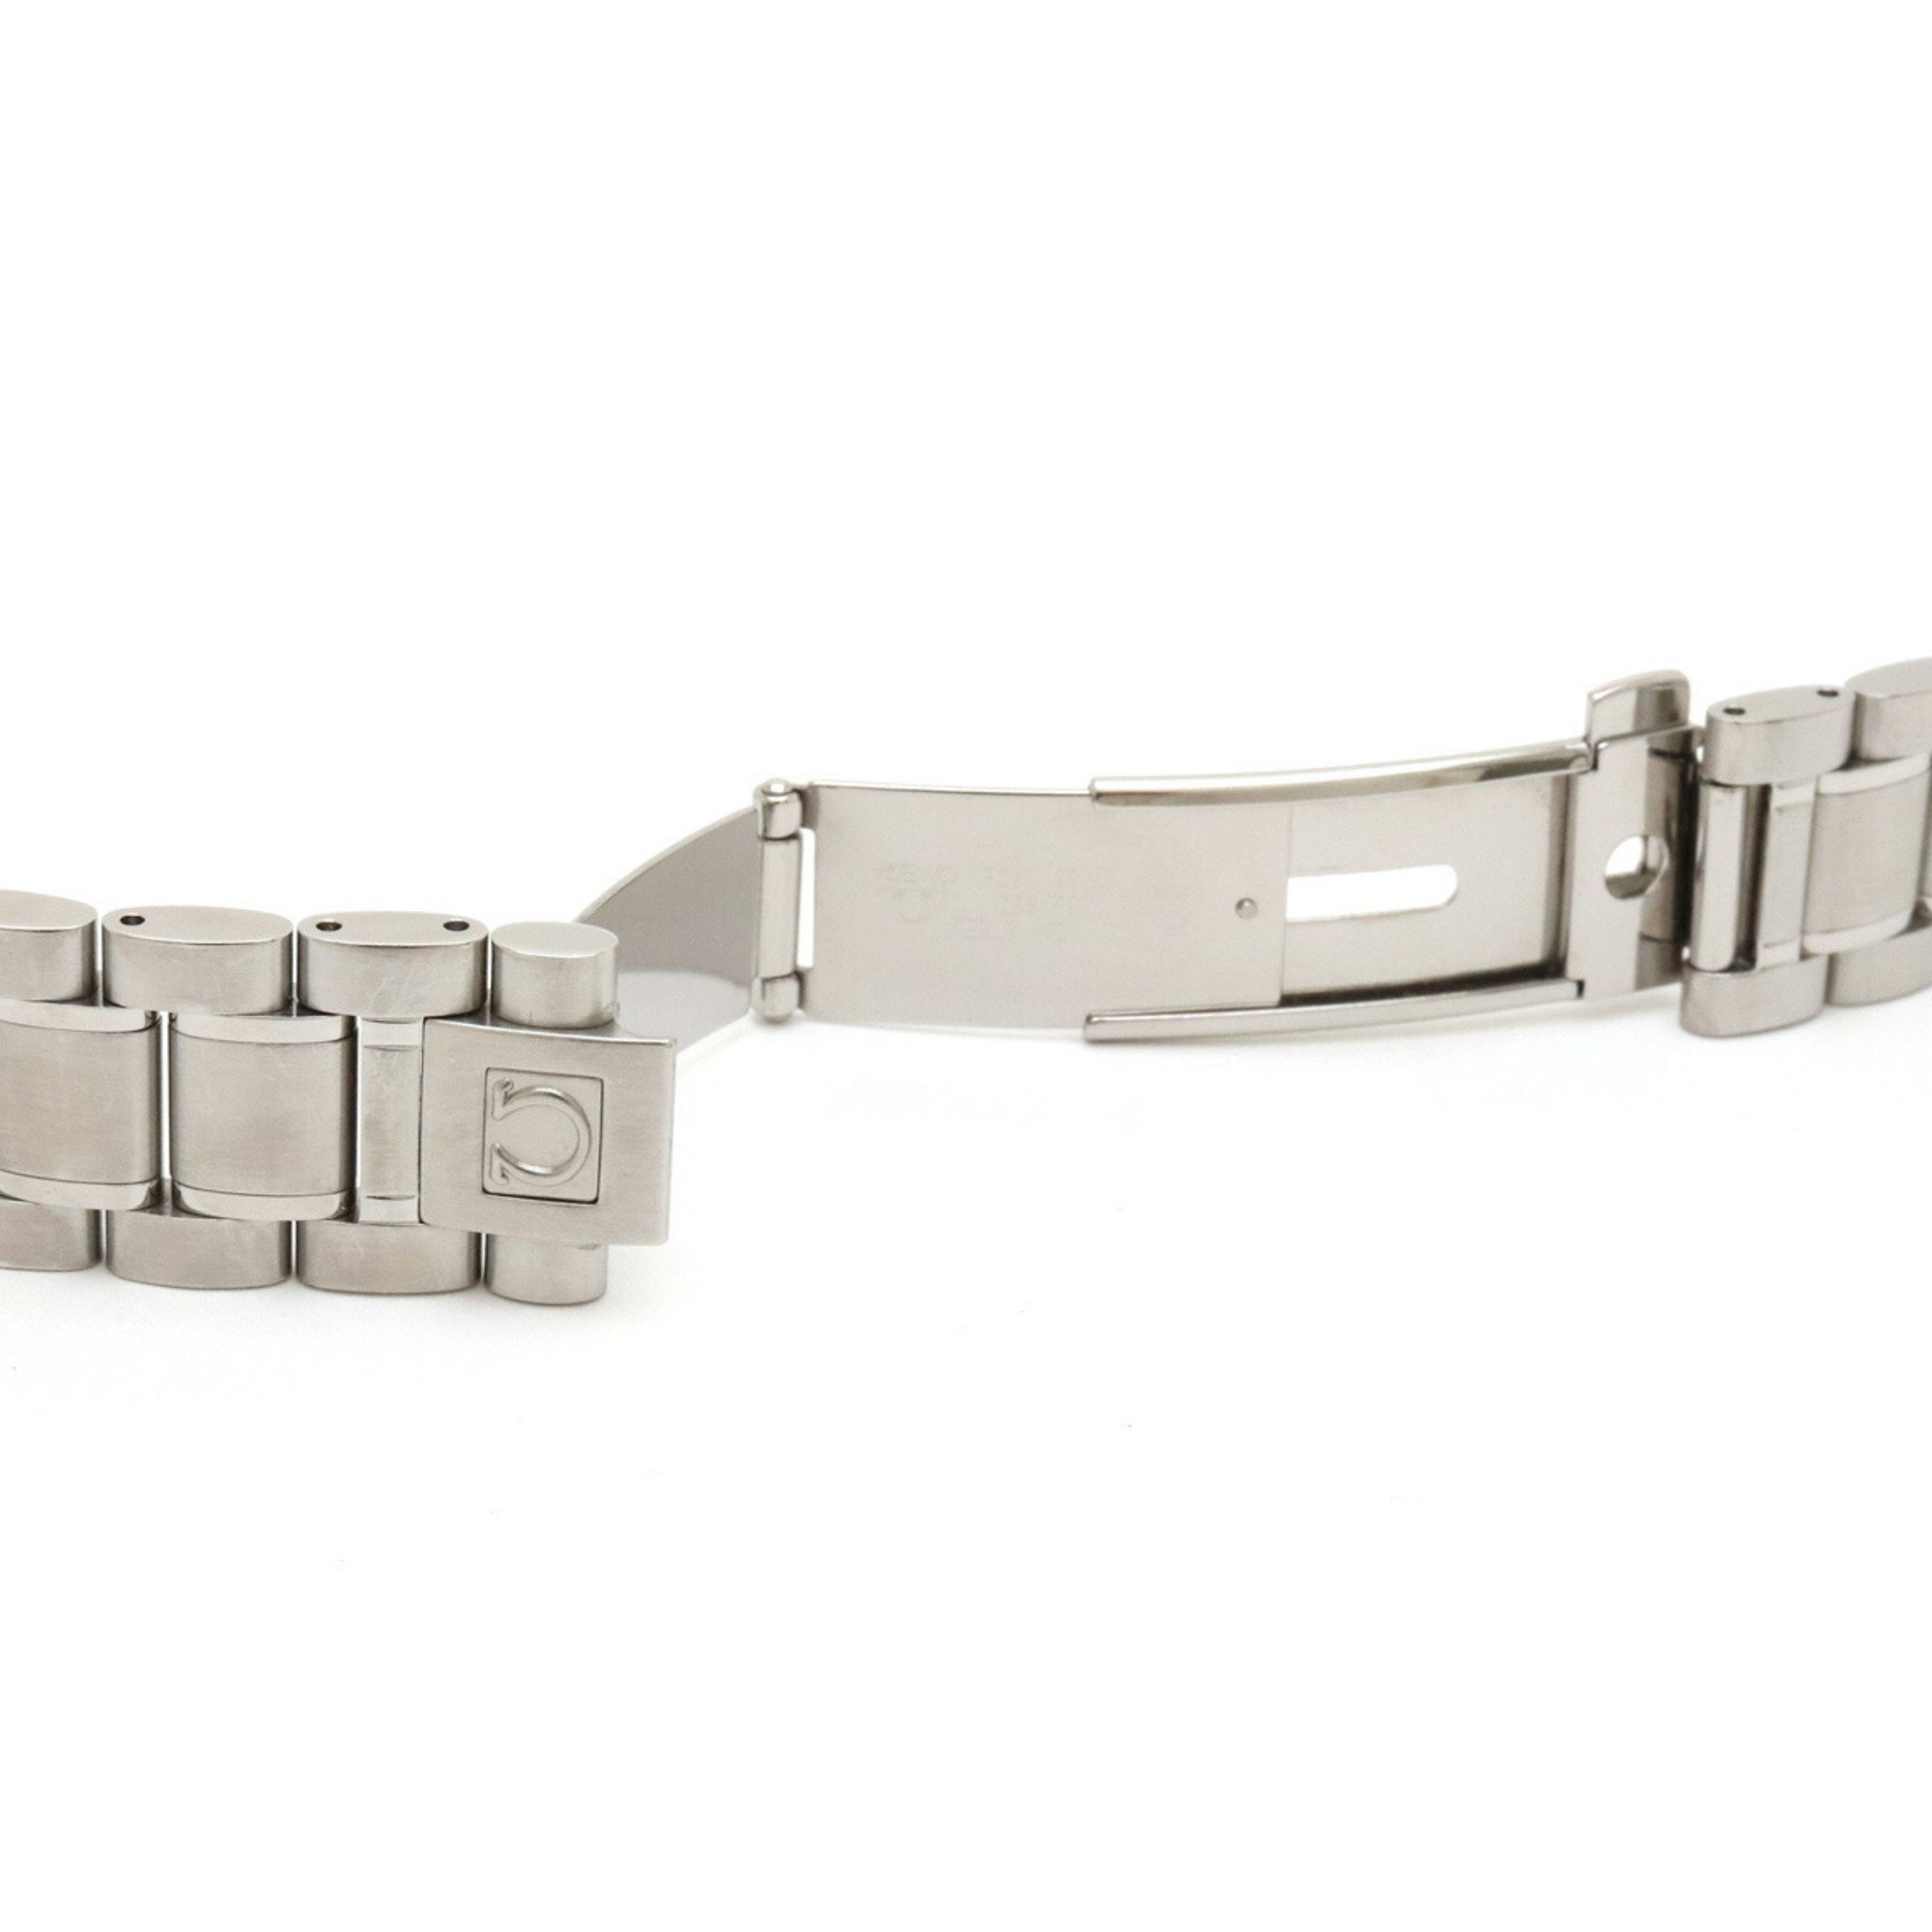 Watch OMEGA Omega Speedmaster genuine bracelet SS top piece 1563 850